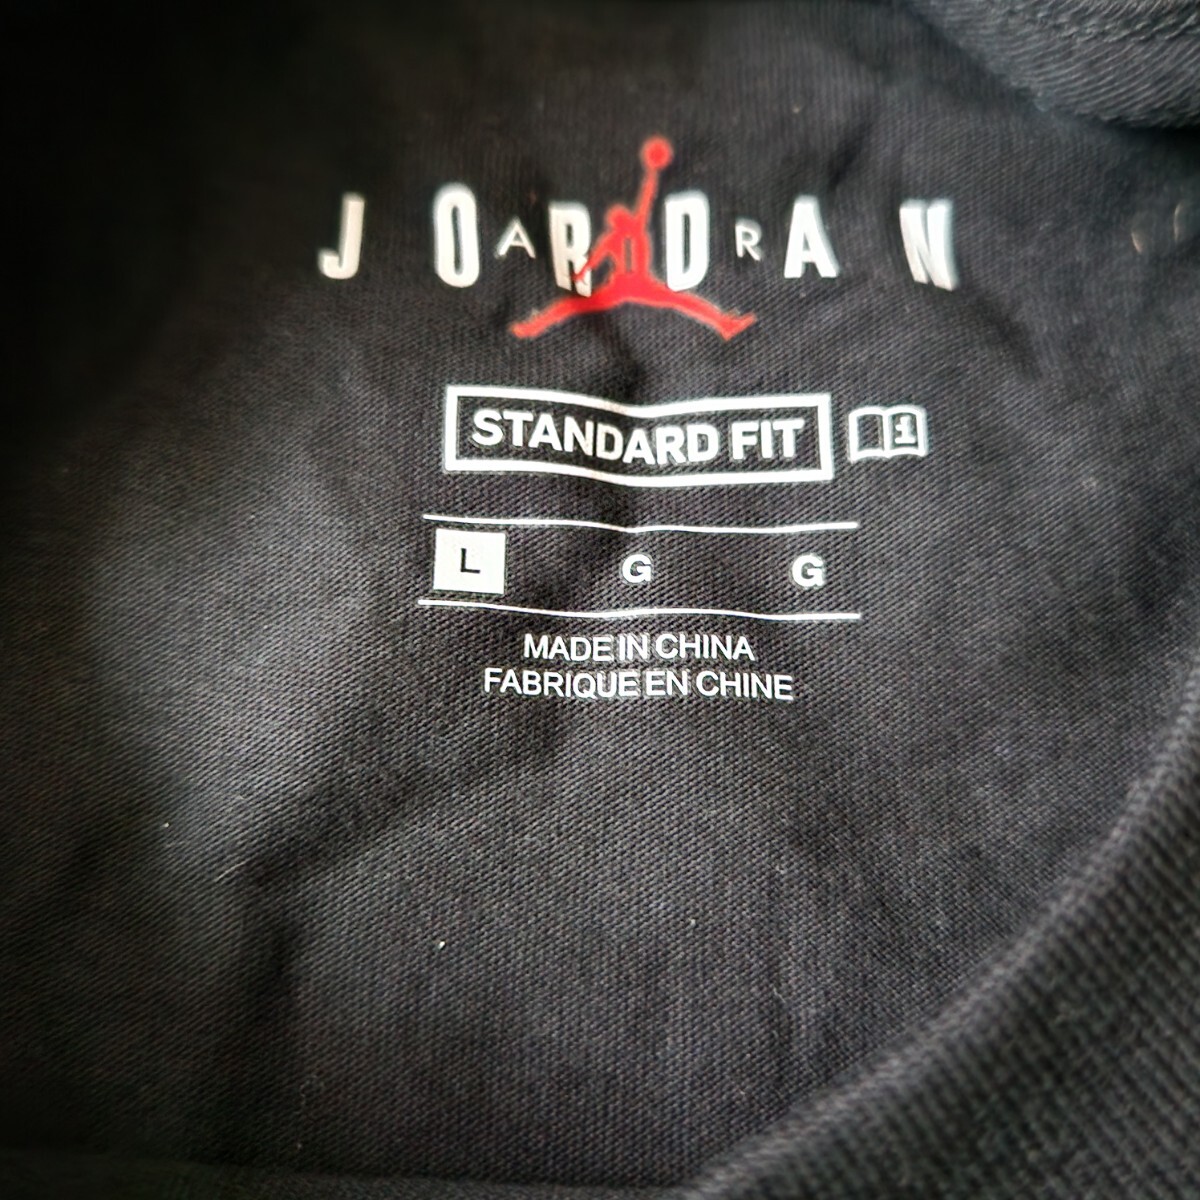  новый товар / не использовался / стандартный товар [ Nike Париж Saint-German × Jordan PSG слово Mark футболка L] Jordan бренд NIKE pra рубашка JORDAN розовый чёрный 